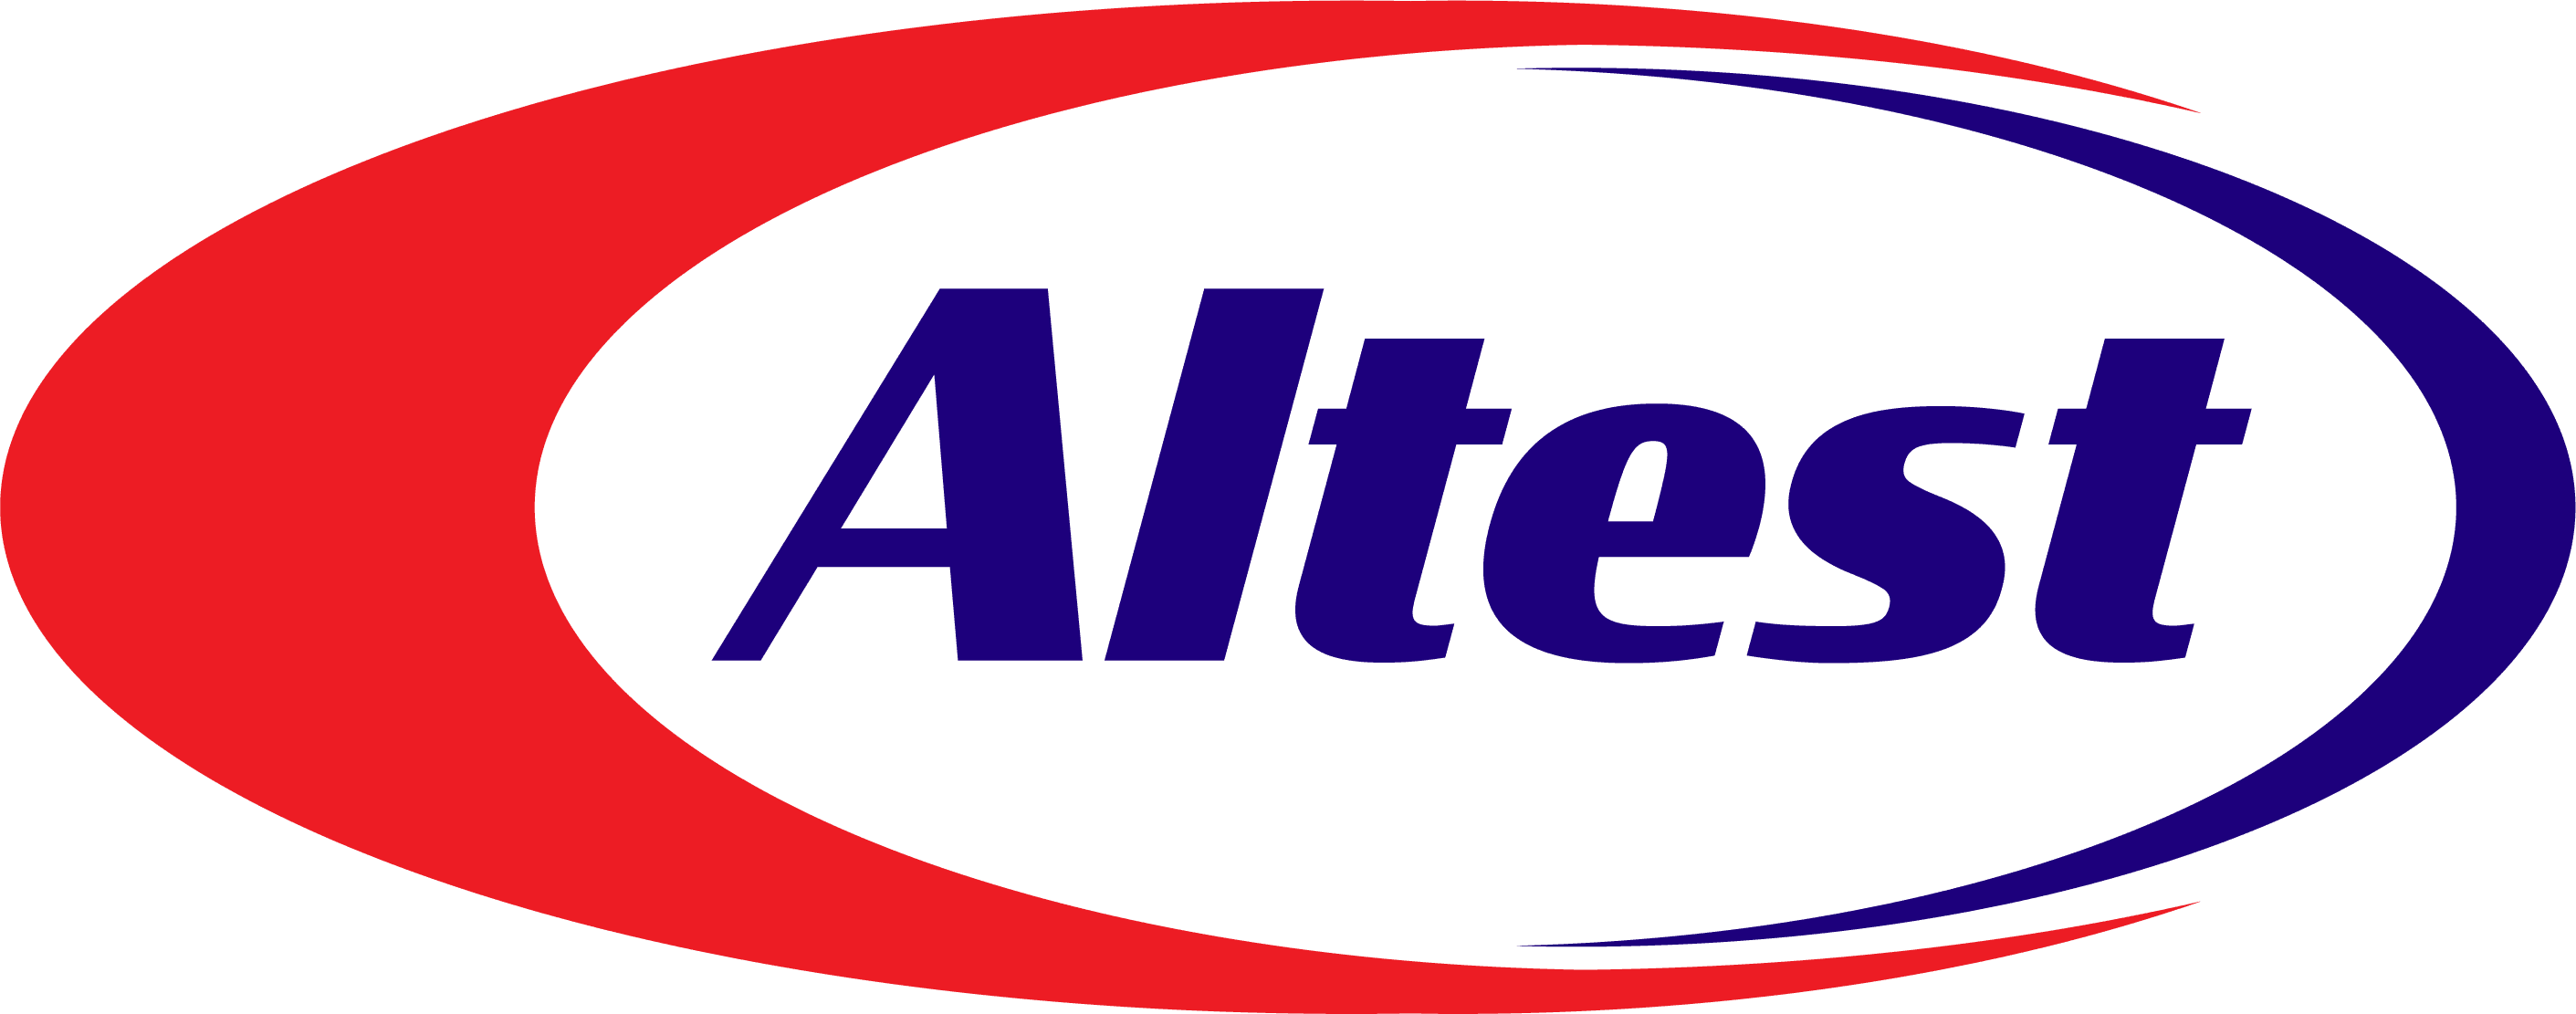 Altest_Logo_Transparent